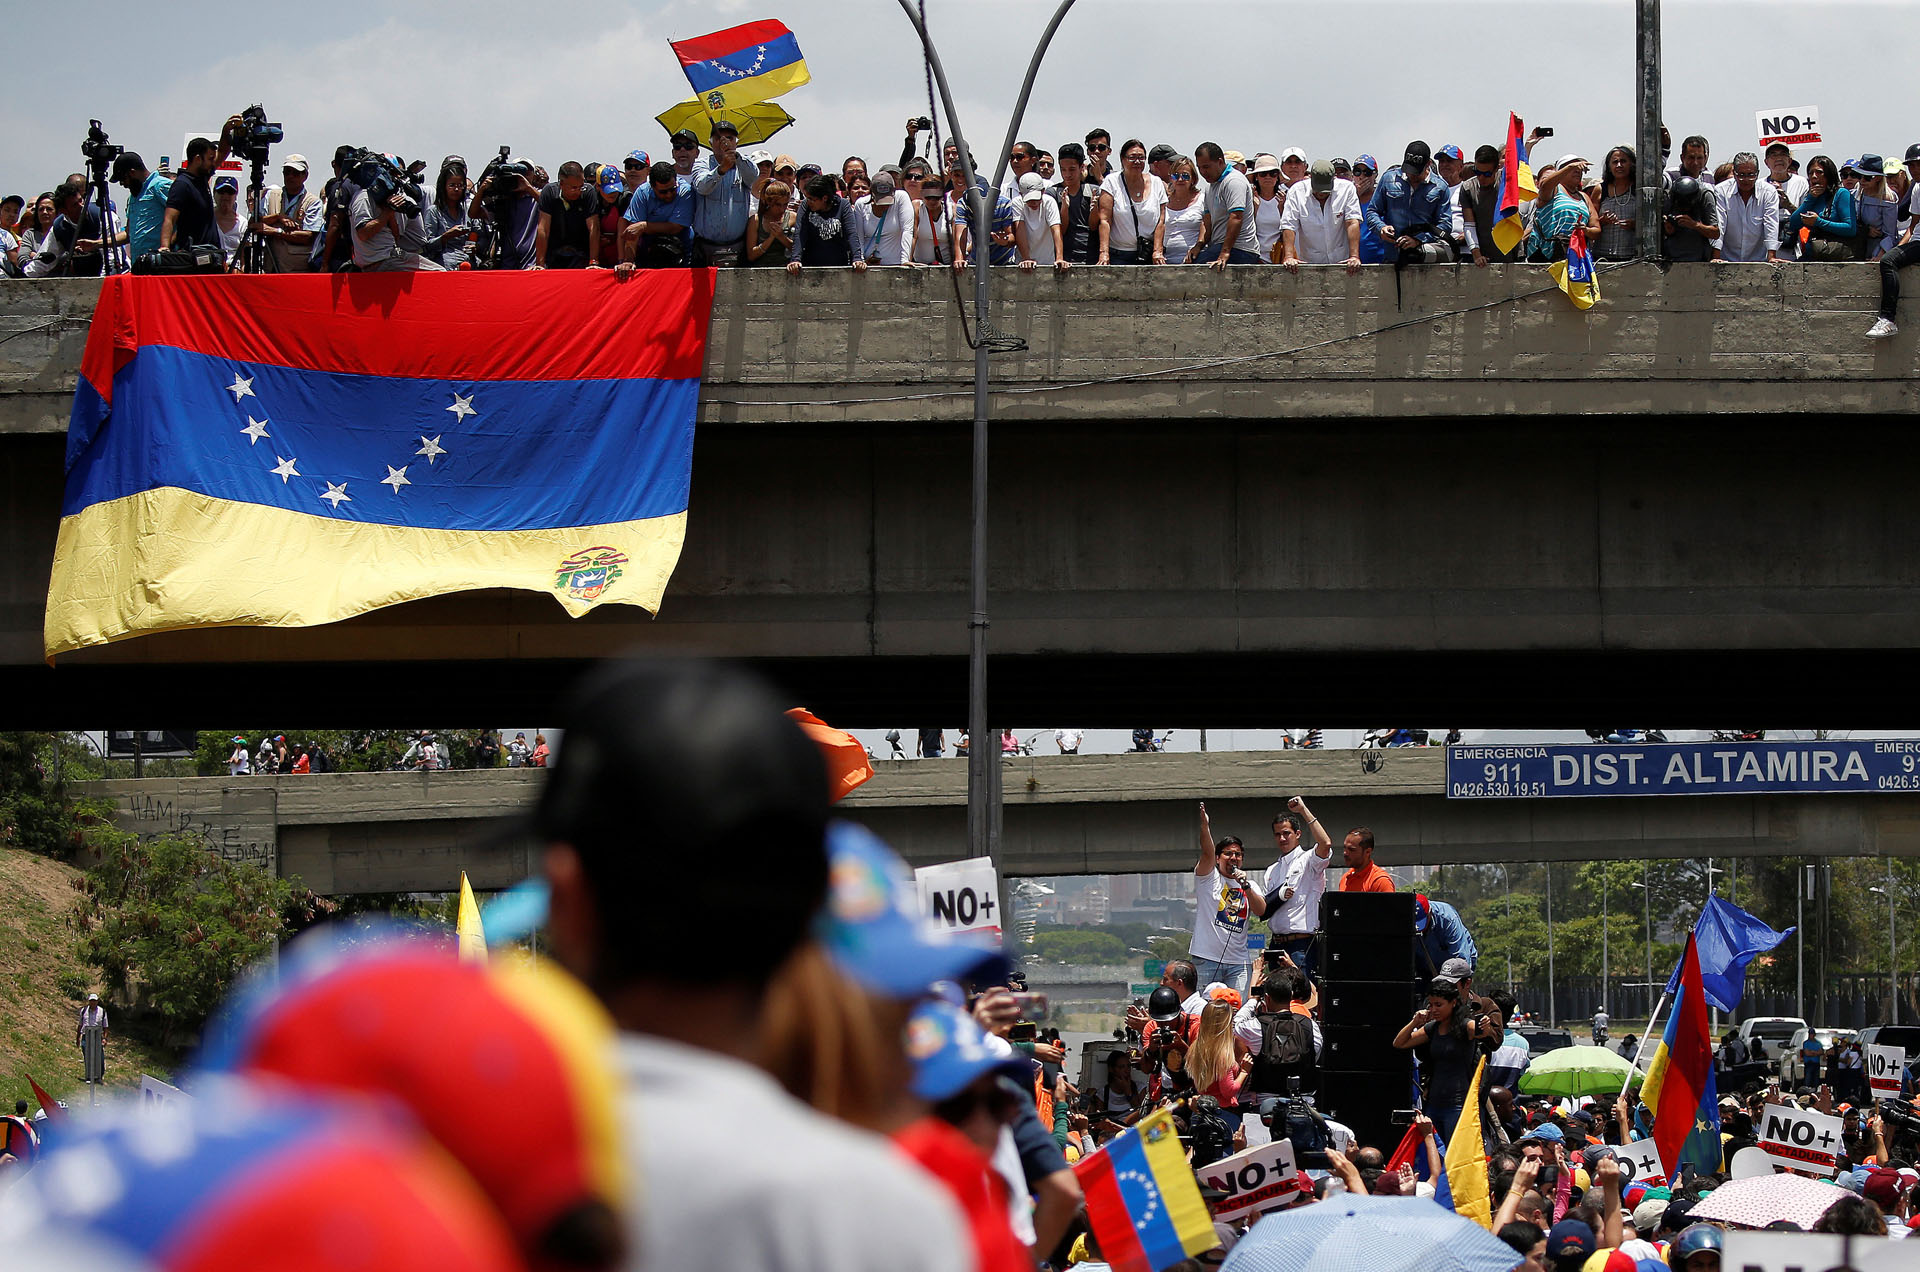 Congressman Freddy Guevara (C) addresses demonstrators during an opposition rally in Caracas, Venezuela, April 6, 2017. REUTERS/Carlos Garcia Rawlins